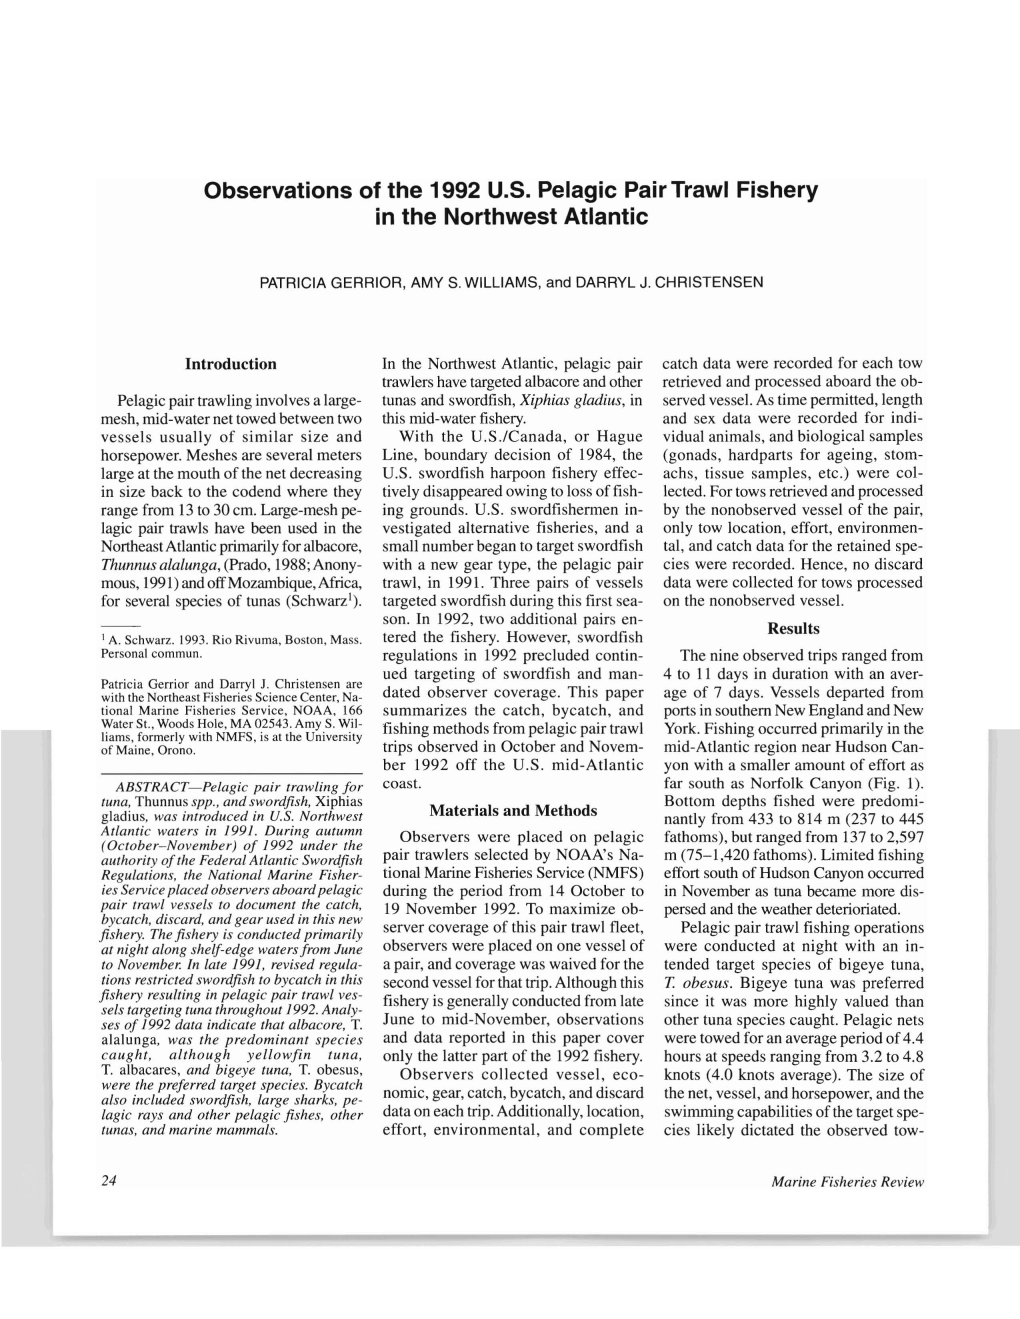 Observations of the 1992 U.S. Pelagic Pair Trawl Fishery in the Northwest Atlantic